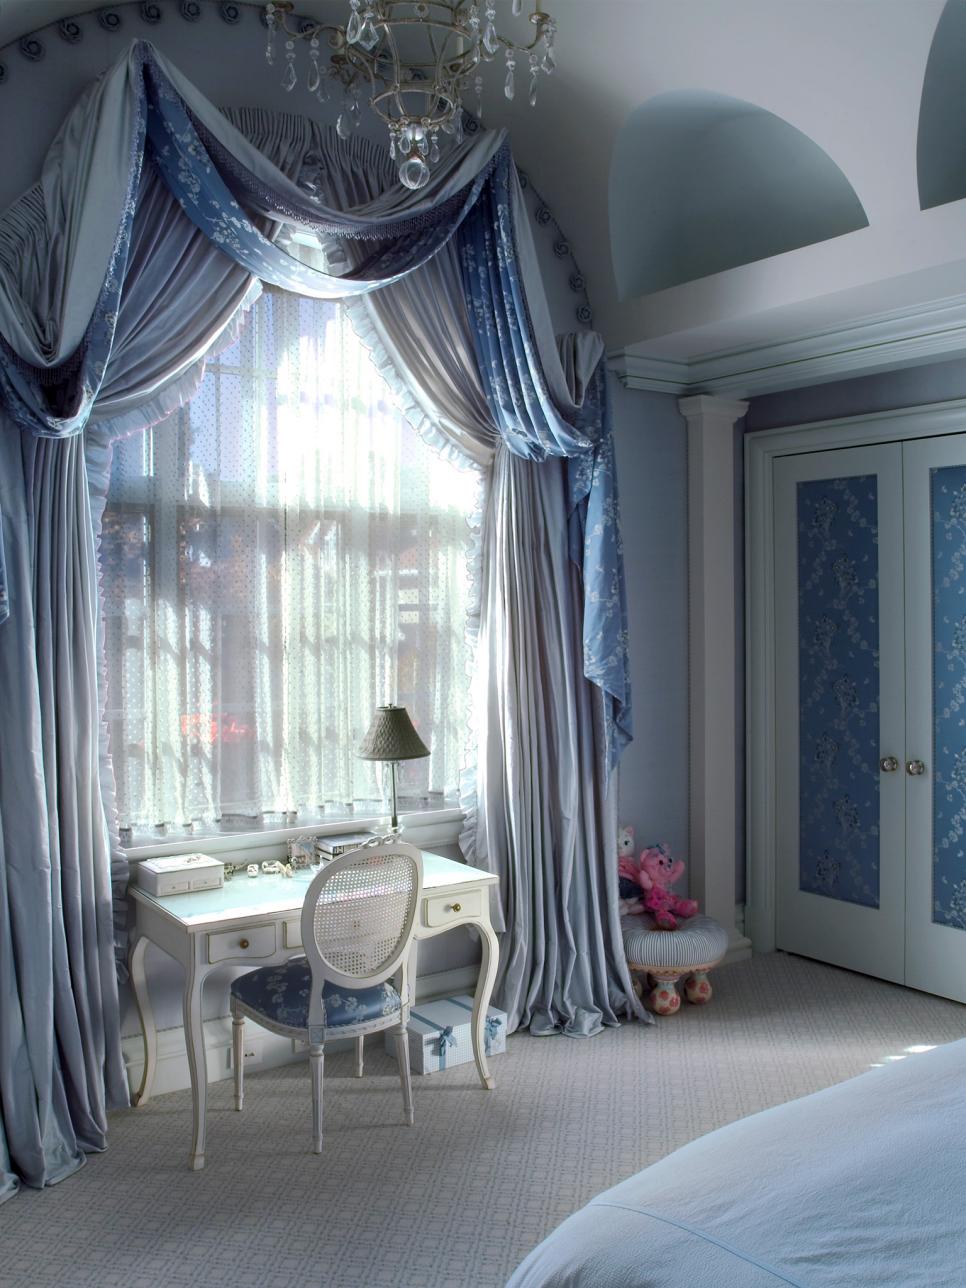 White Desk in Blue Bedroom Fit for A Princess | HGTV